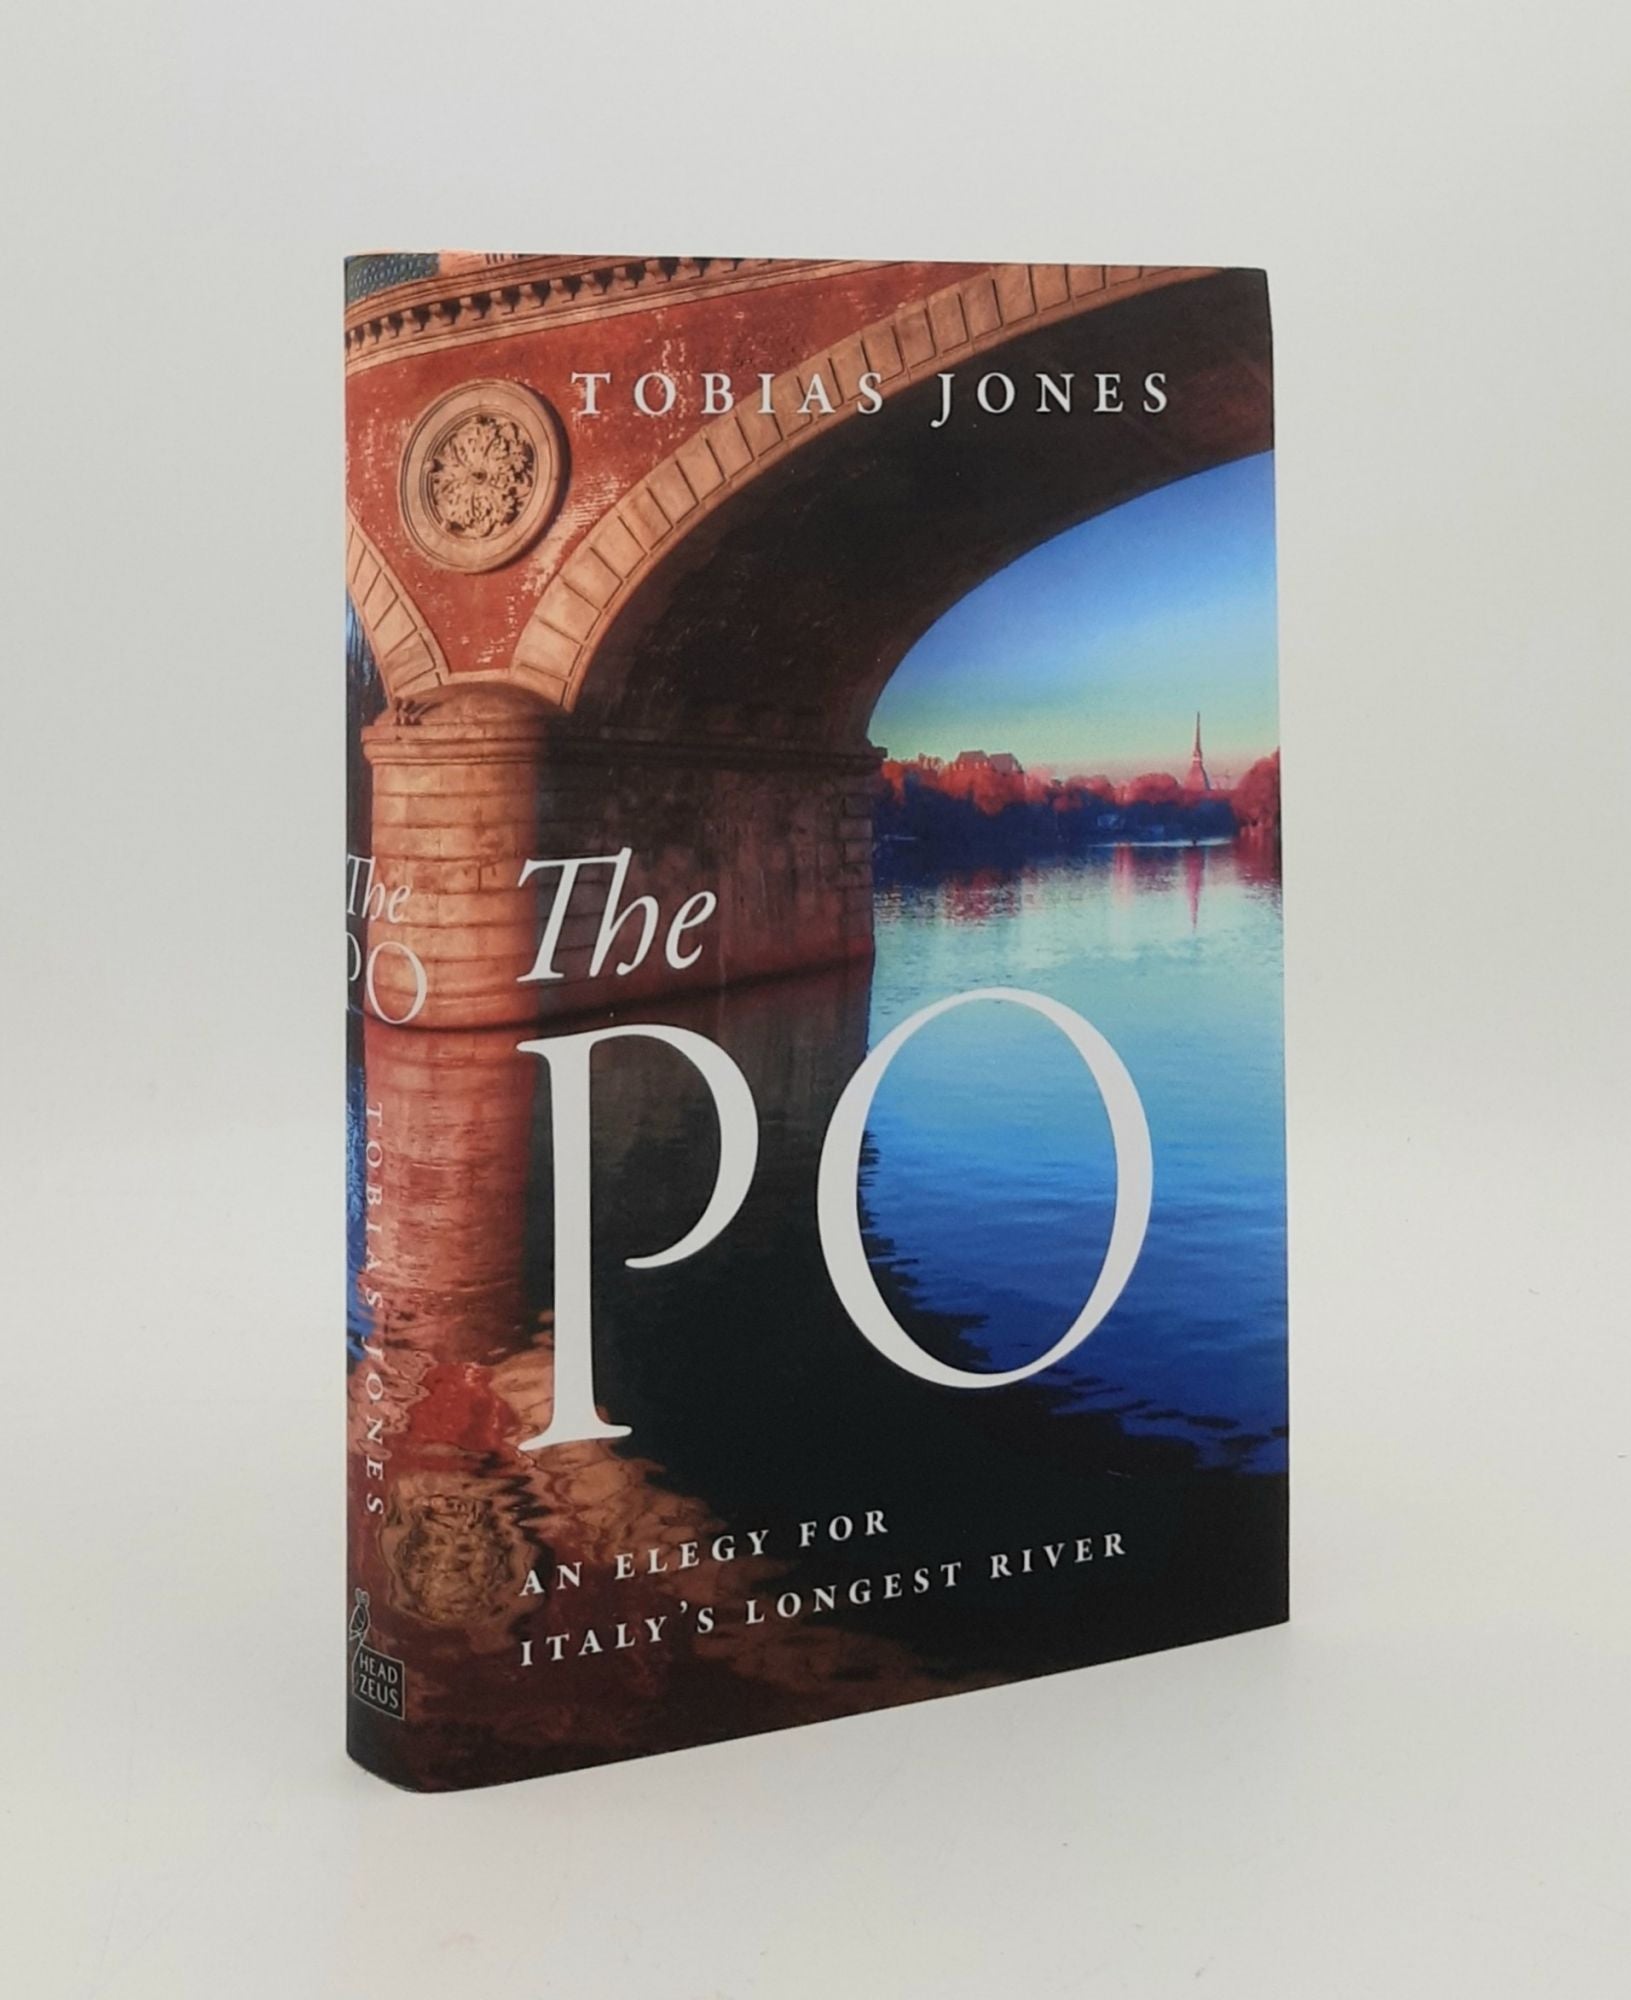 JONES Tobias - The Po an Elegy for Italy's Longest River